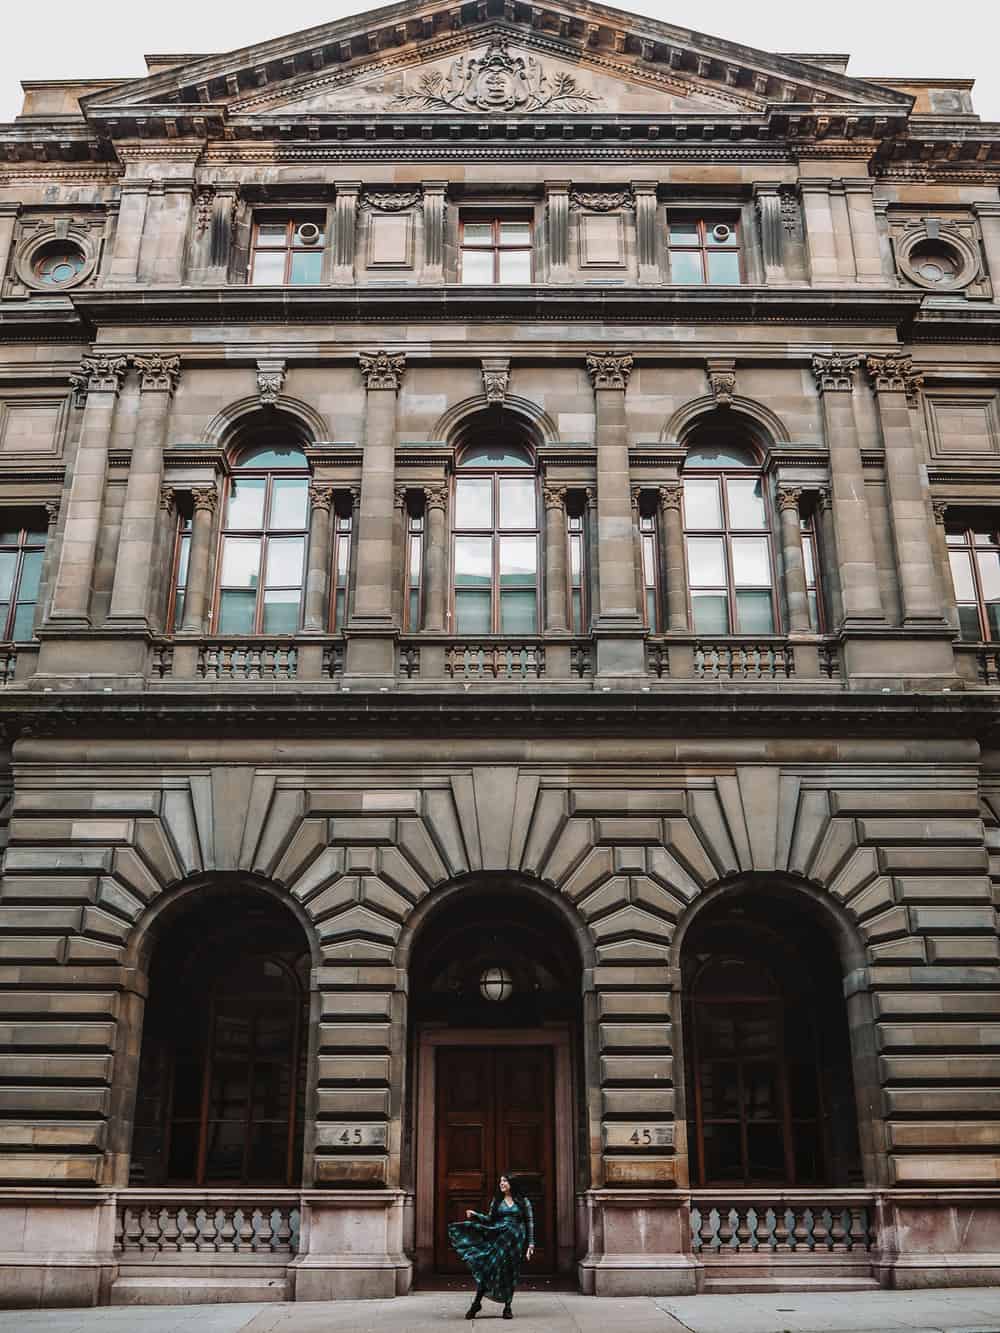 George Square Glasgow Outlander | Outlander locations in Glasgow